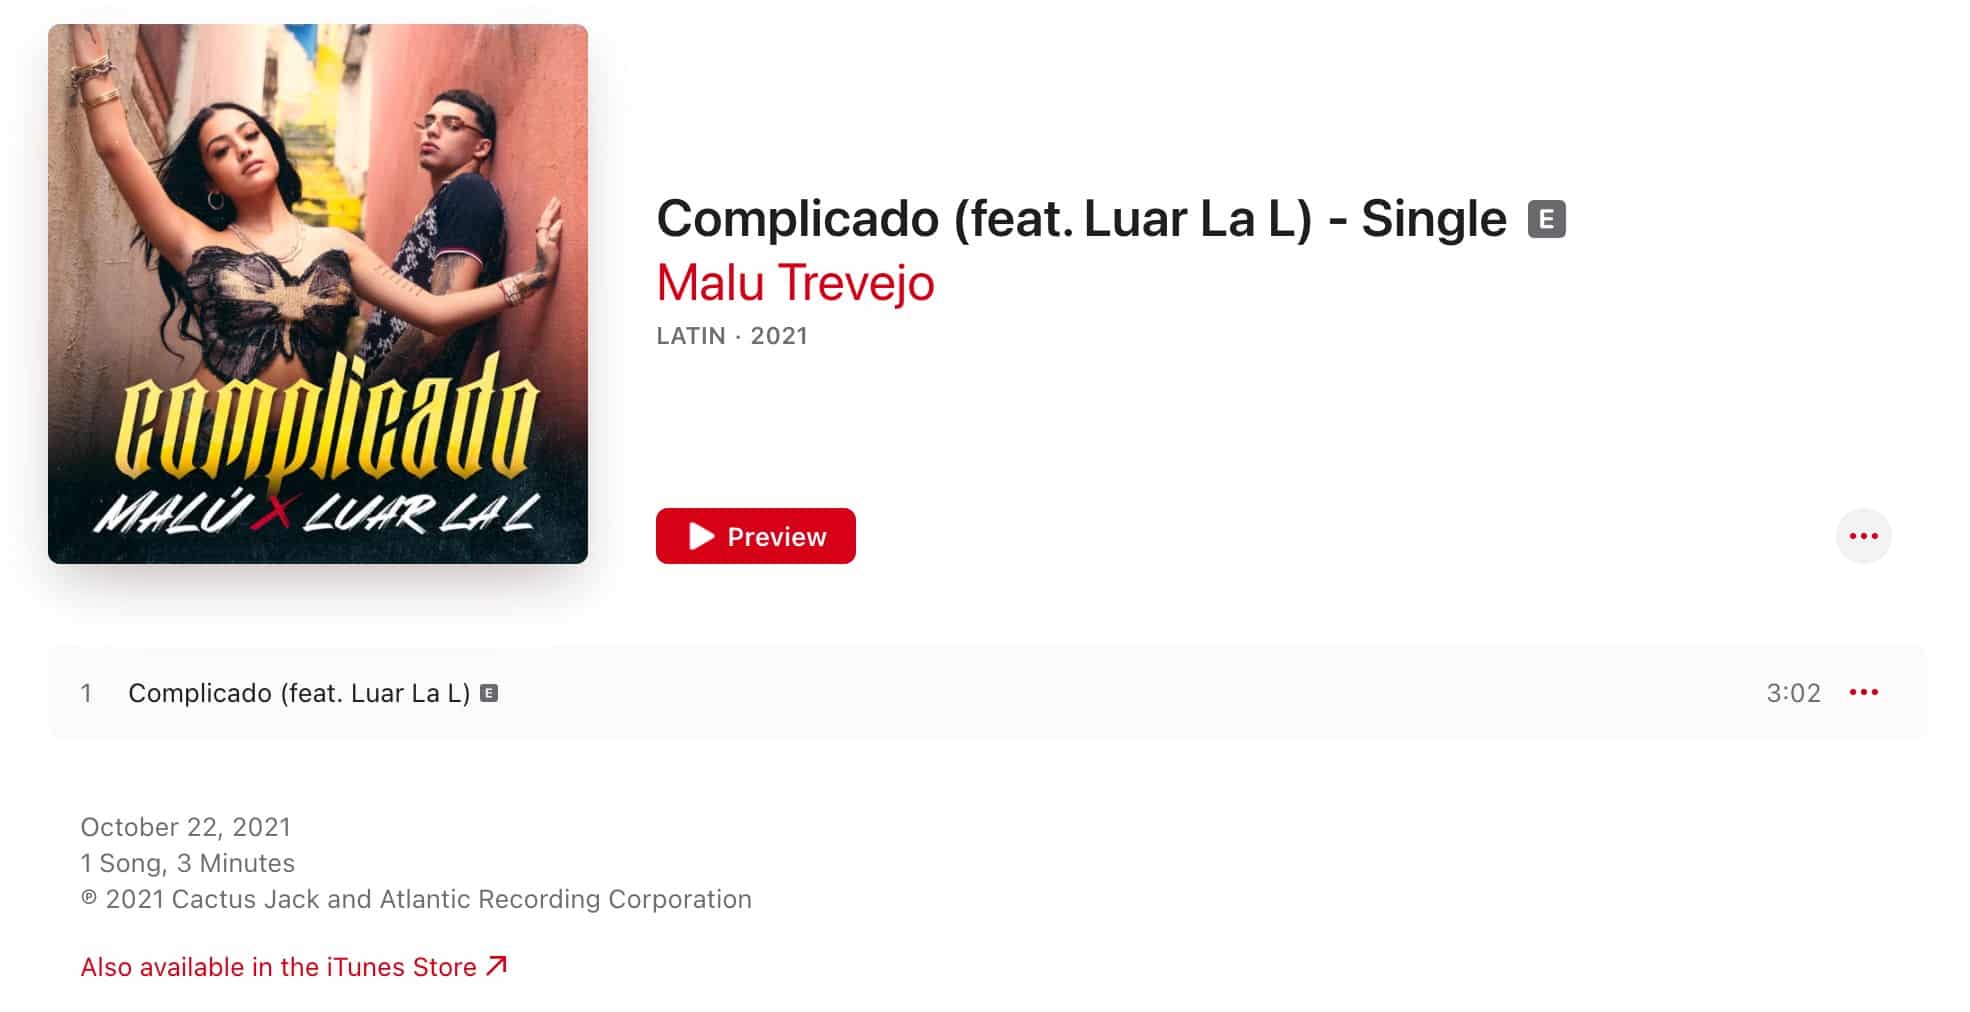 Malu Trevejo's song Complicado on Apple Music